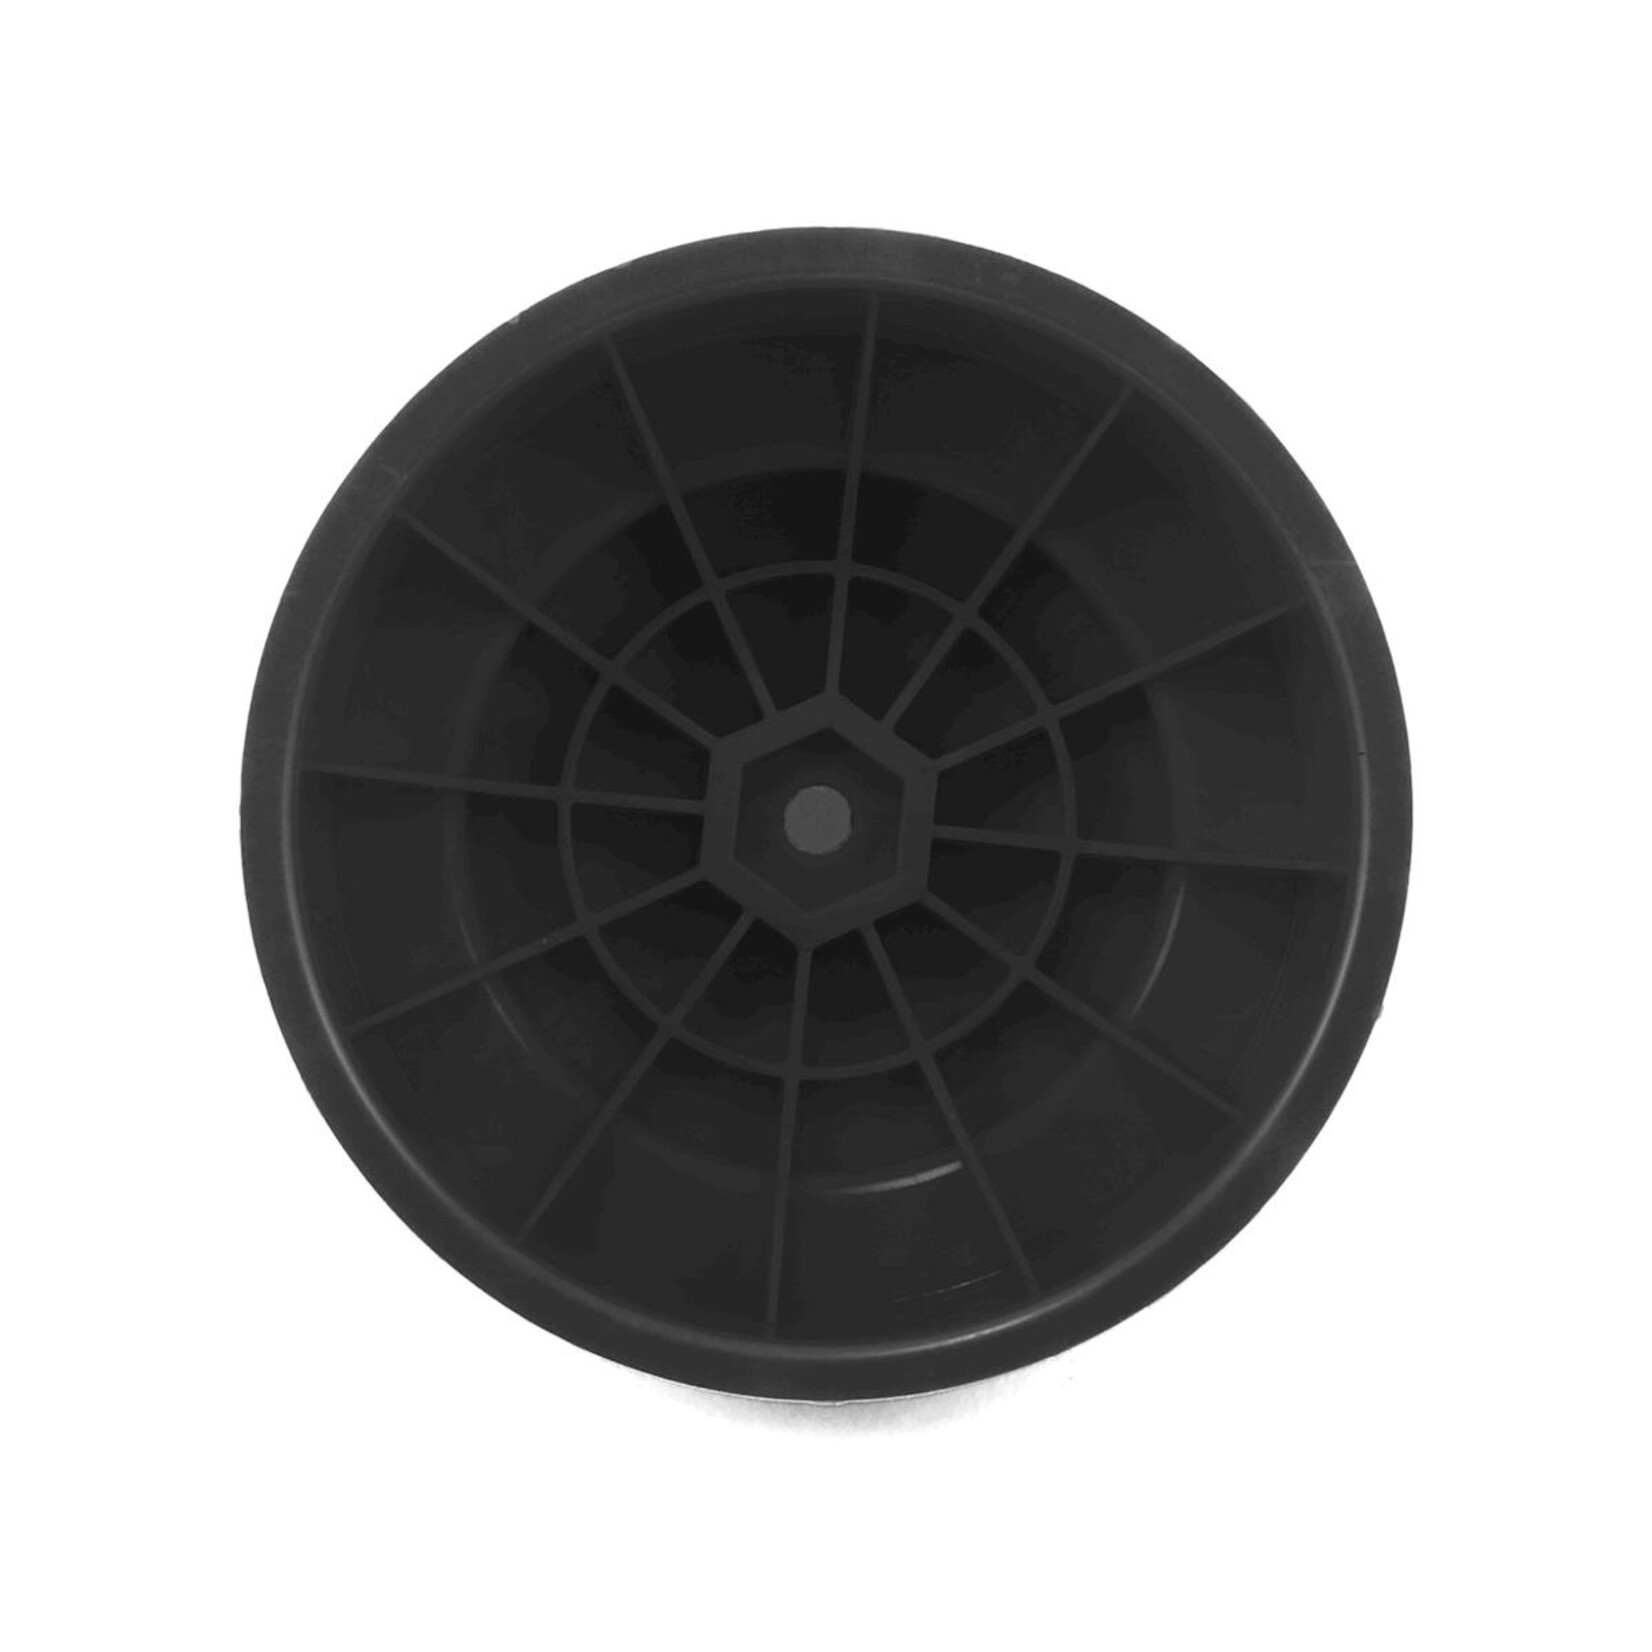 DE Racing DE Racing 12mm Hex "Borrego" Short Course Wheels (Black) (4) (22SCT/TEN-SCTE) #DER-BS4-LB